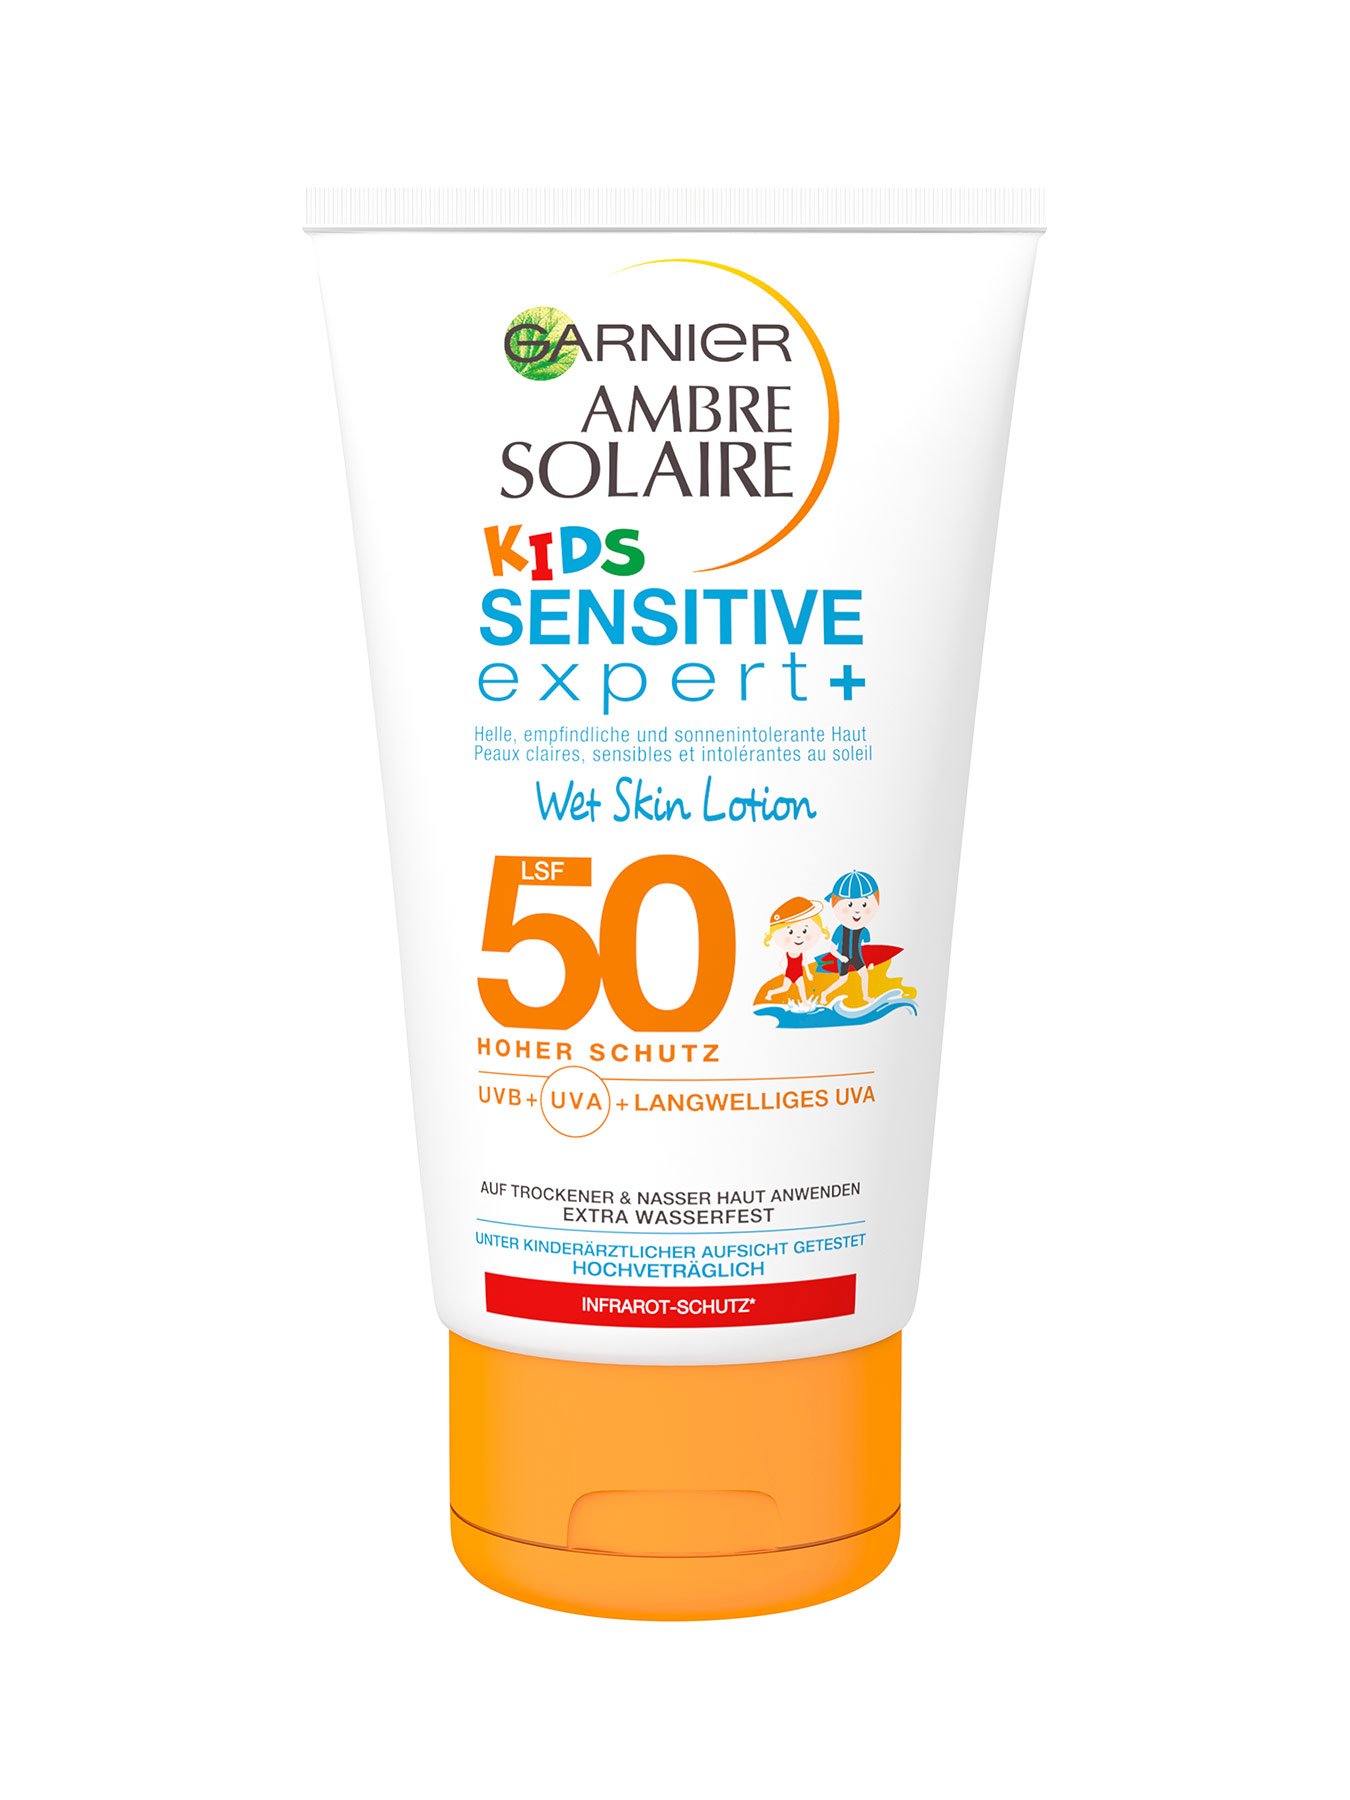 Kids Sensitive expert+ Lait Wet 50 Skin FPS Garnier | Lotion